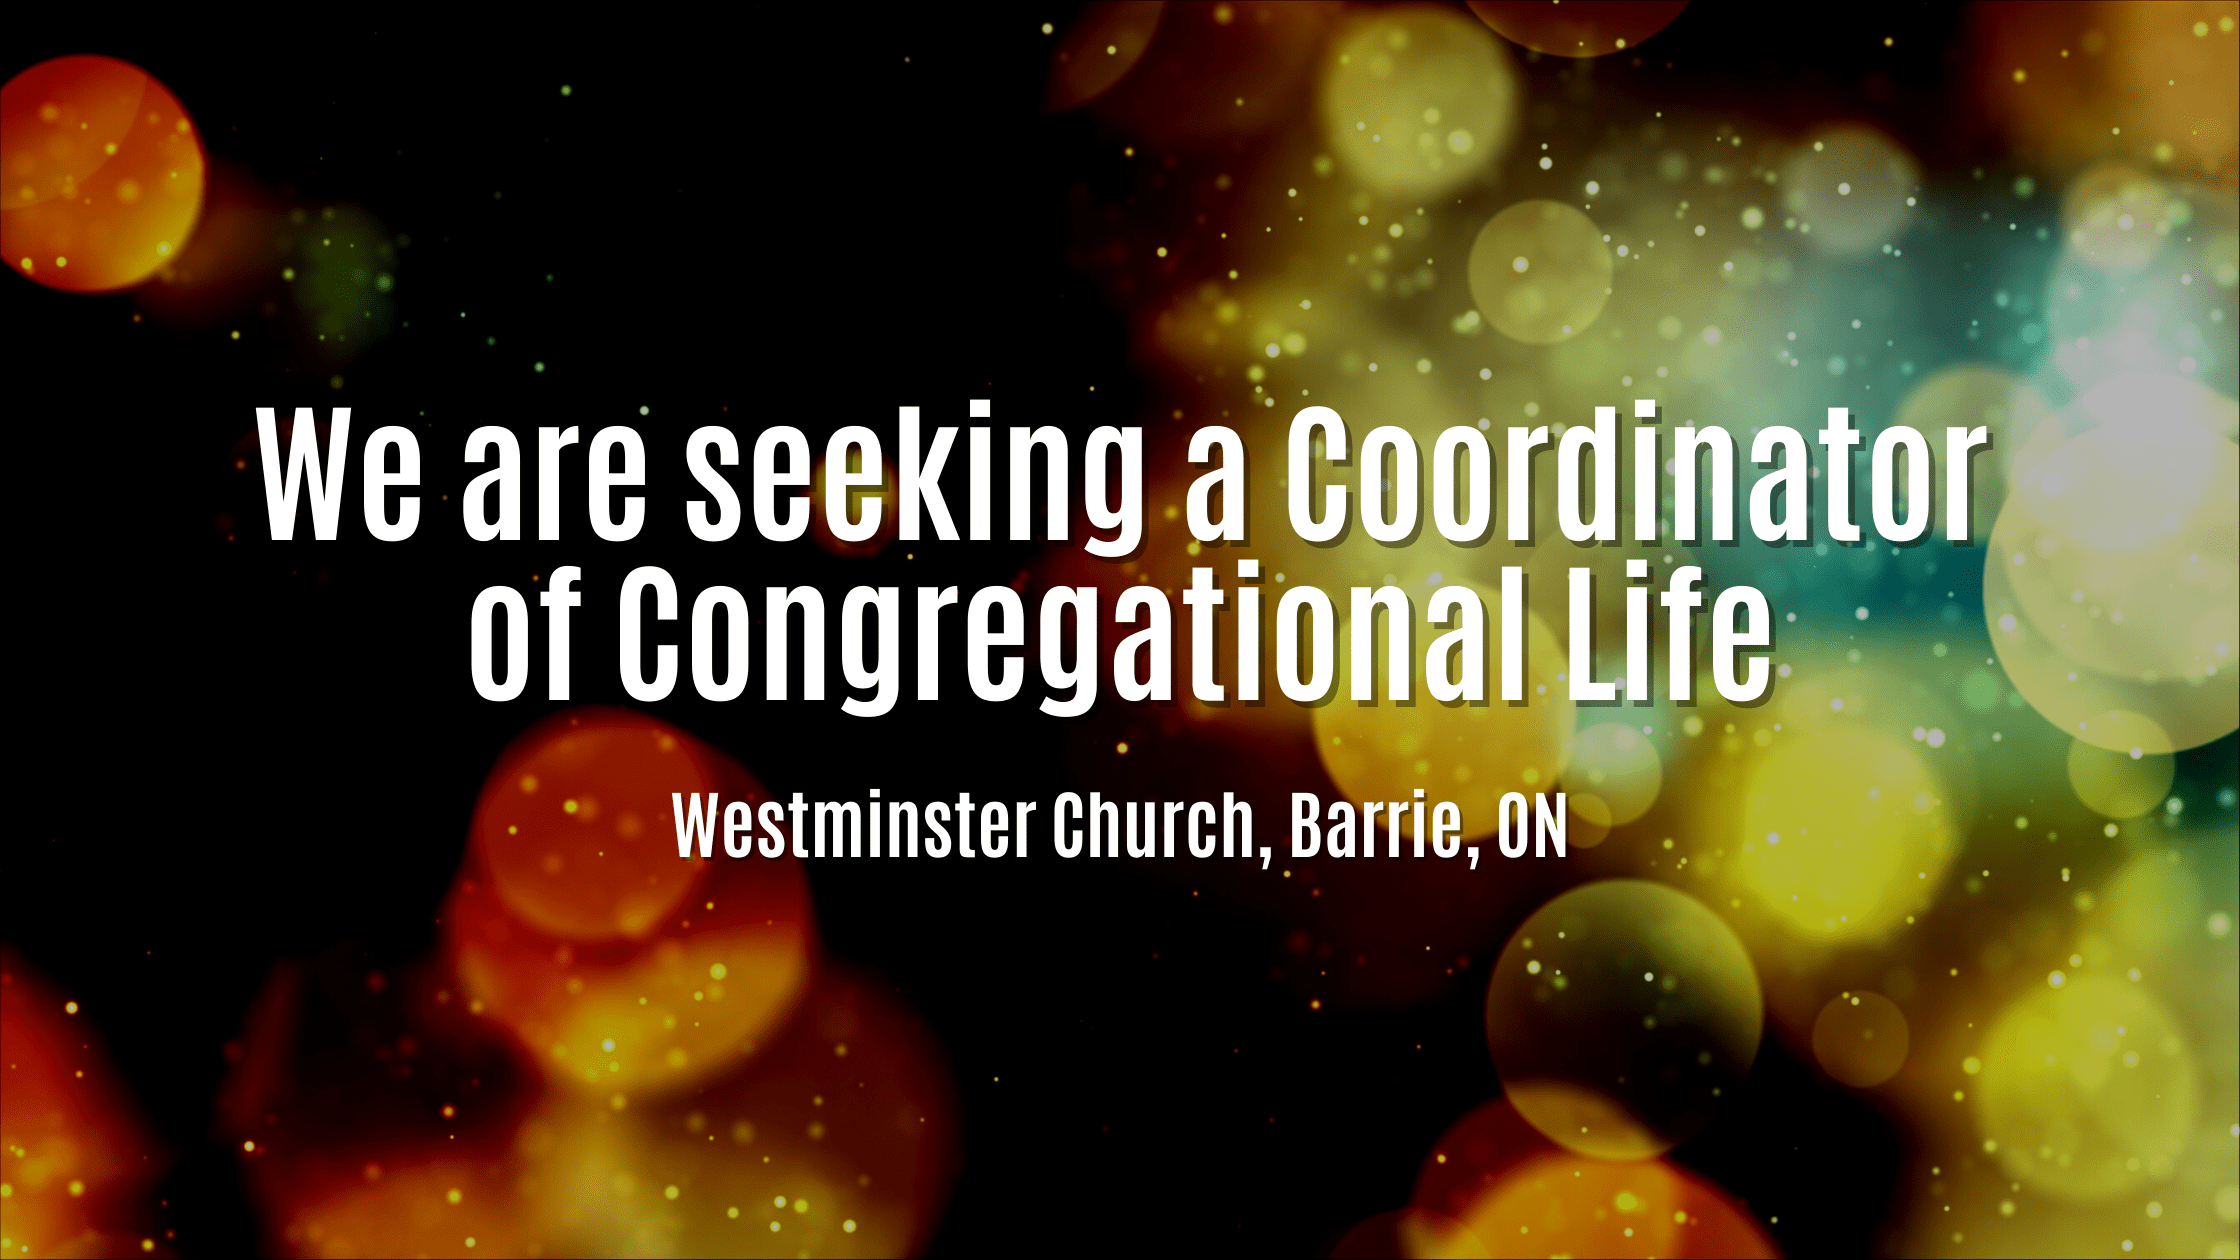 We are seeking a Coordinator of Congregational Life